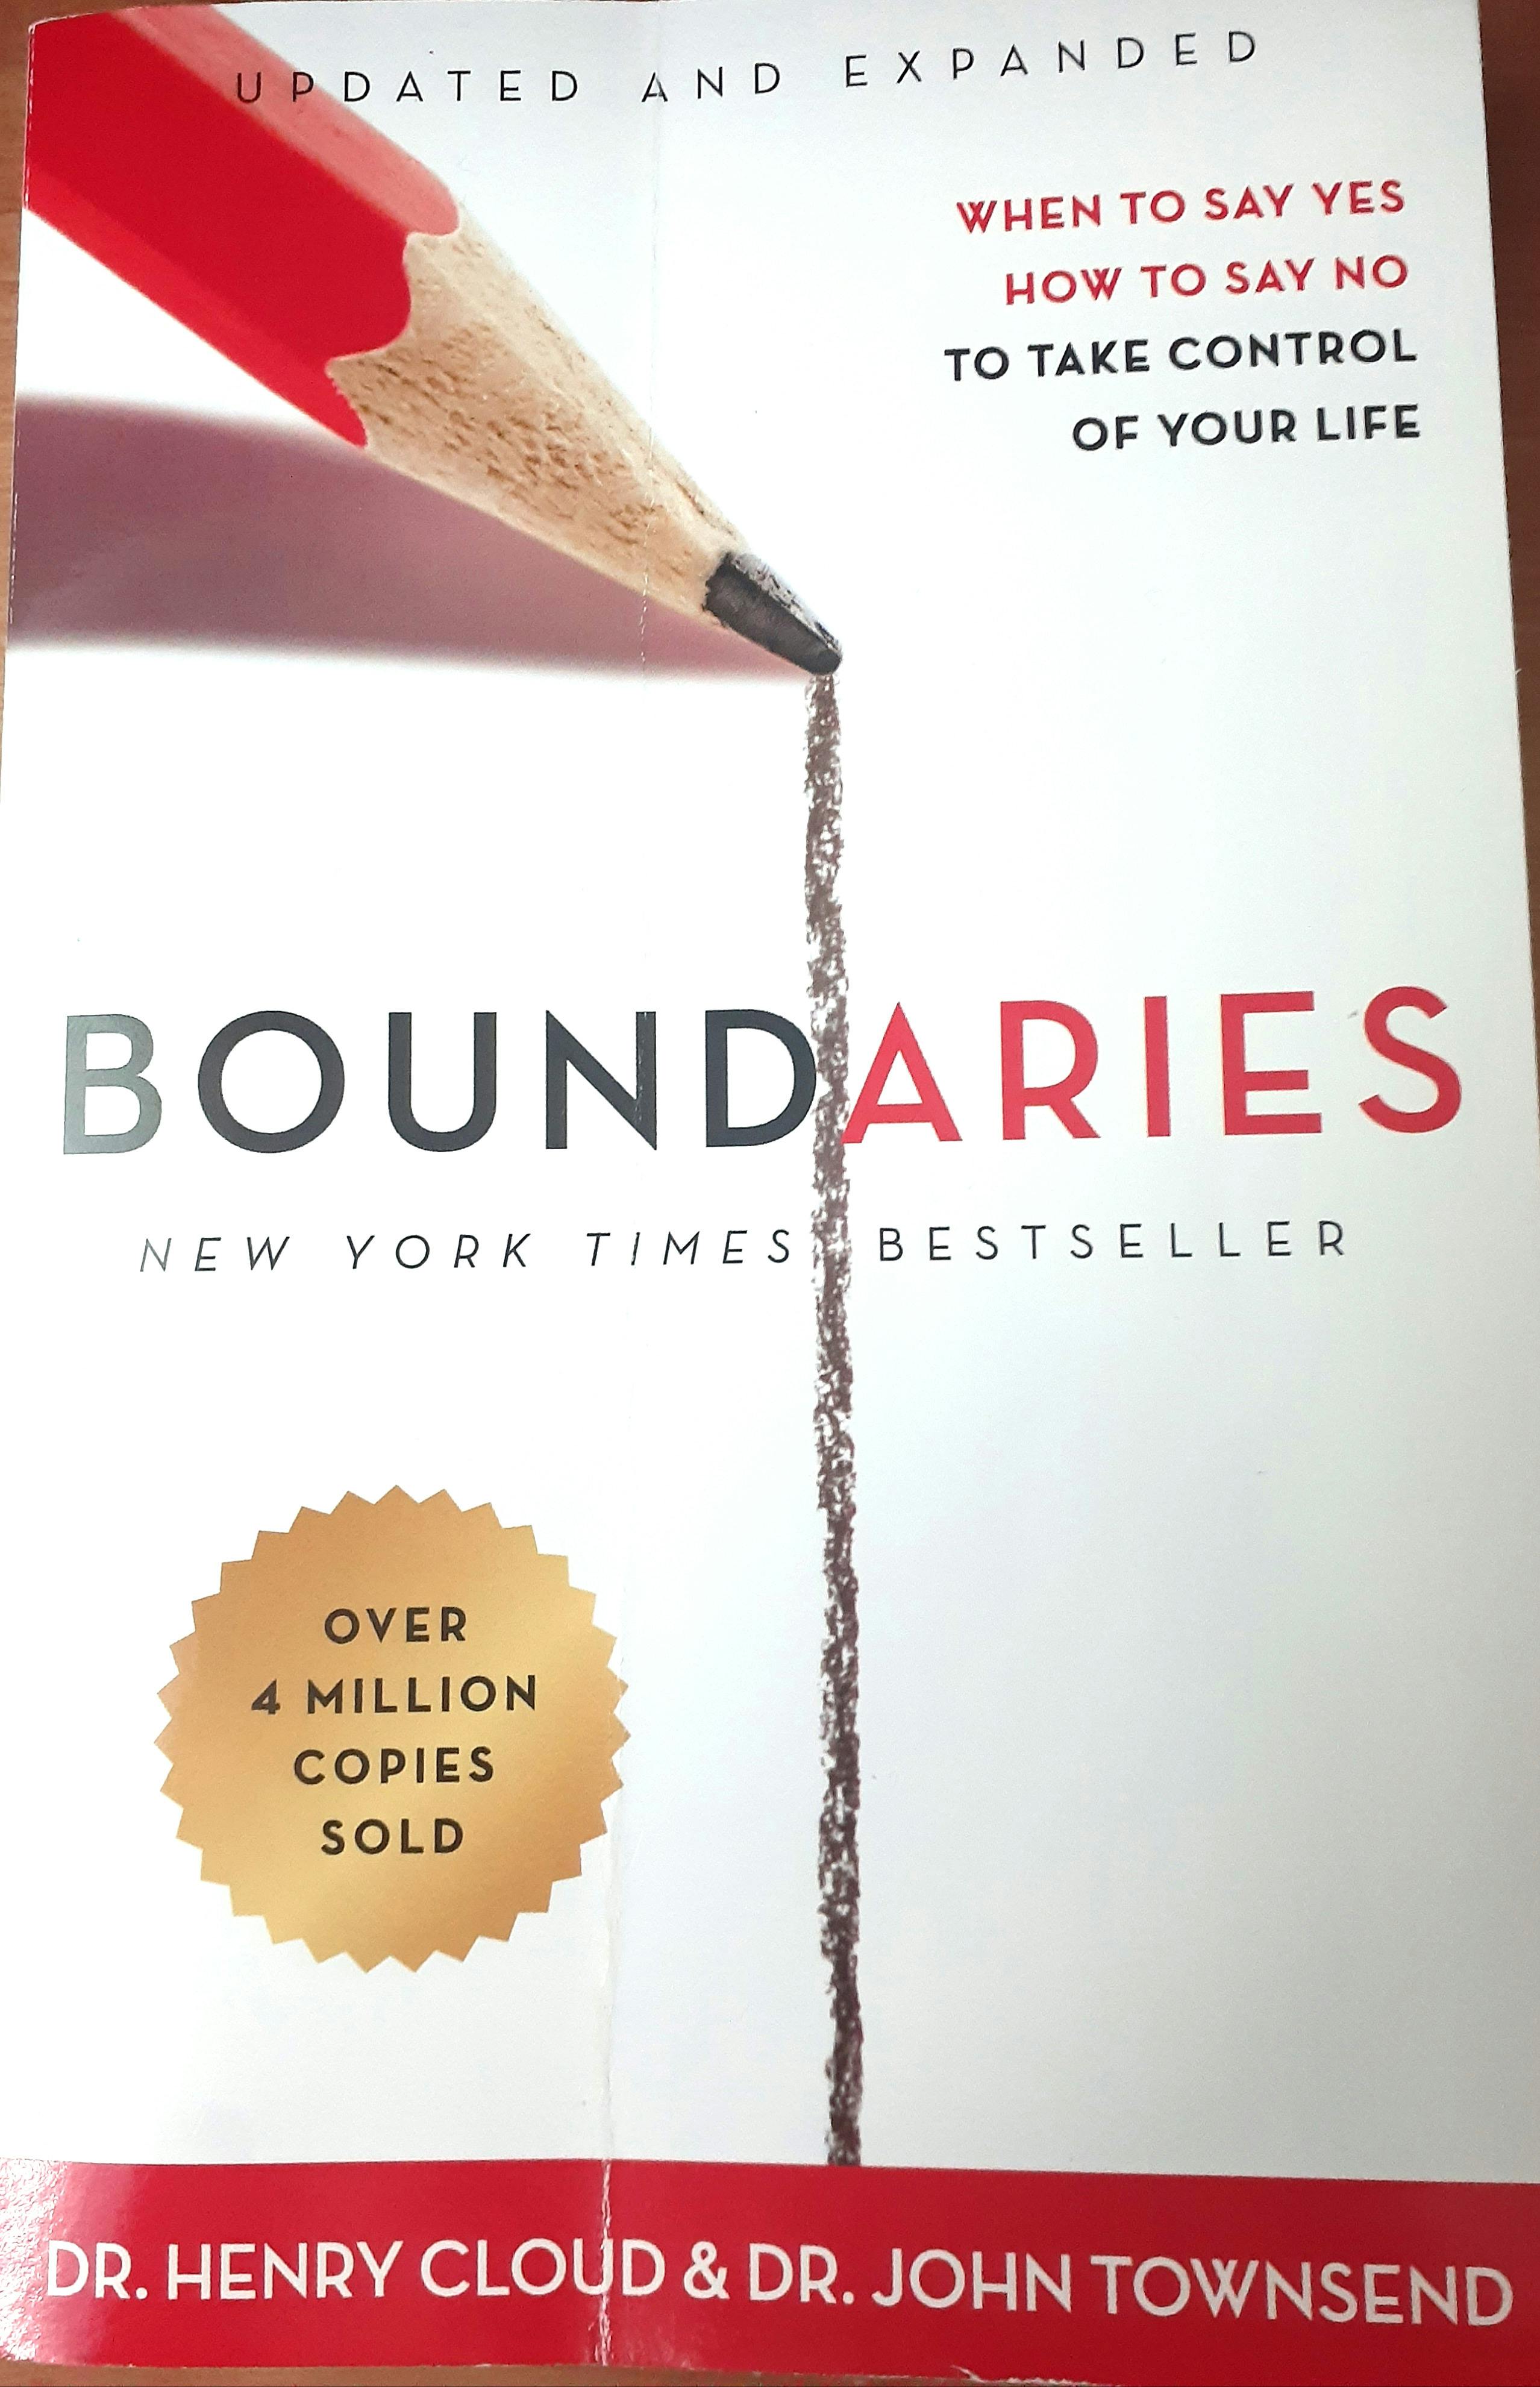 boundaries.jpg